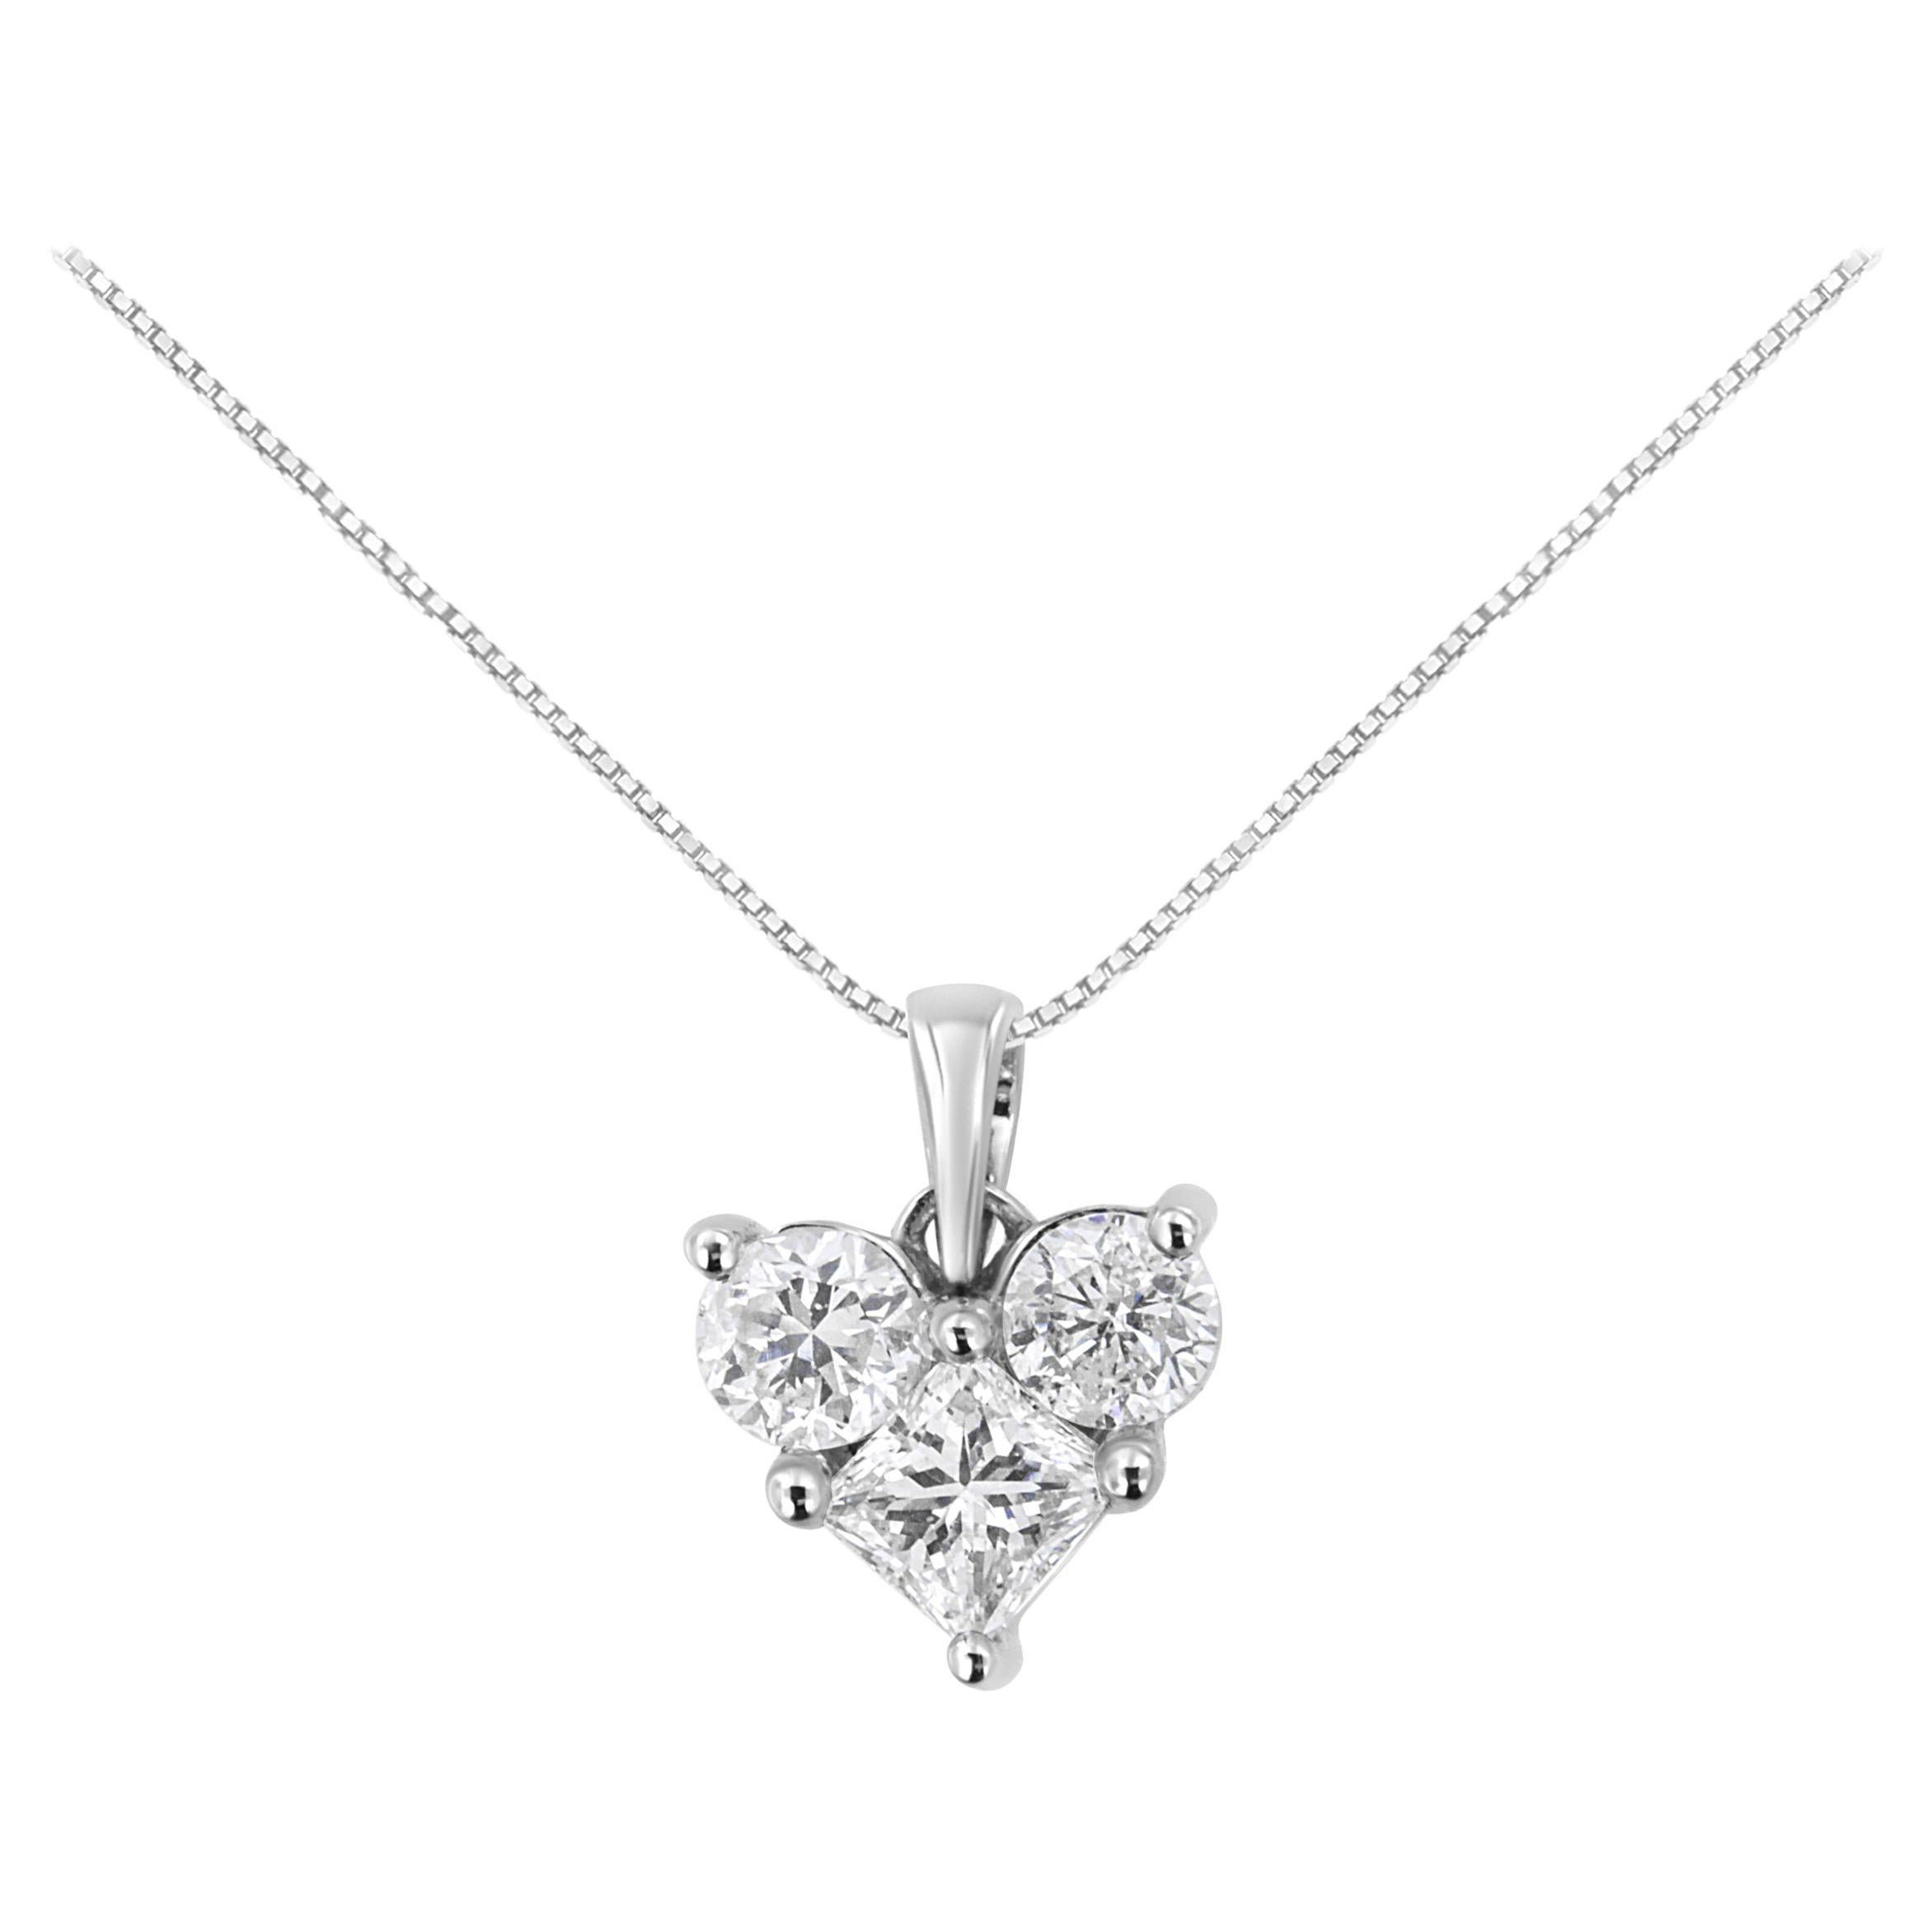 10K White Gold 1.0 Carat Diamond Heart Shaped Pendant Necklace